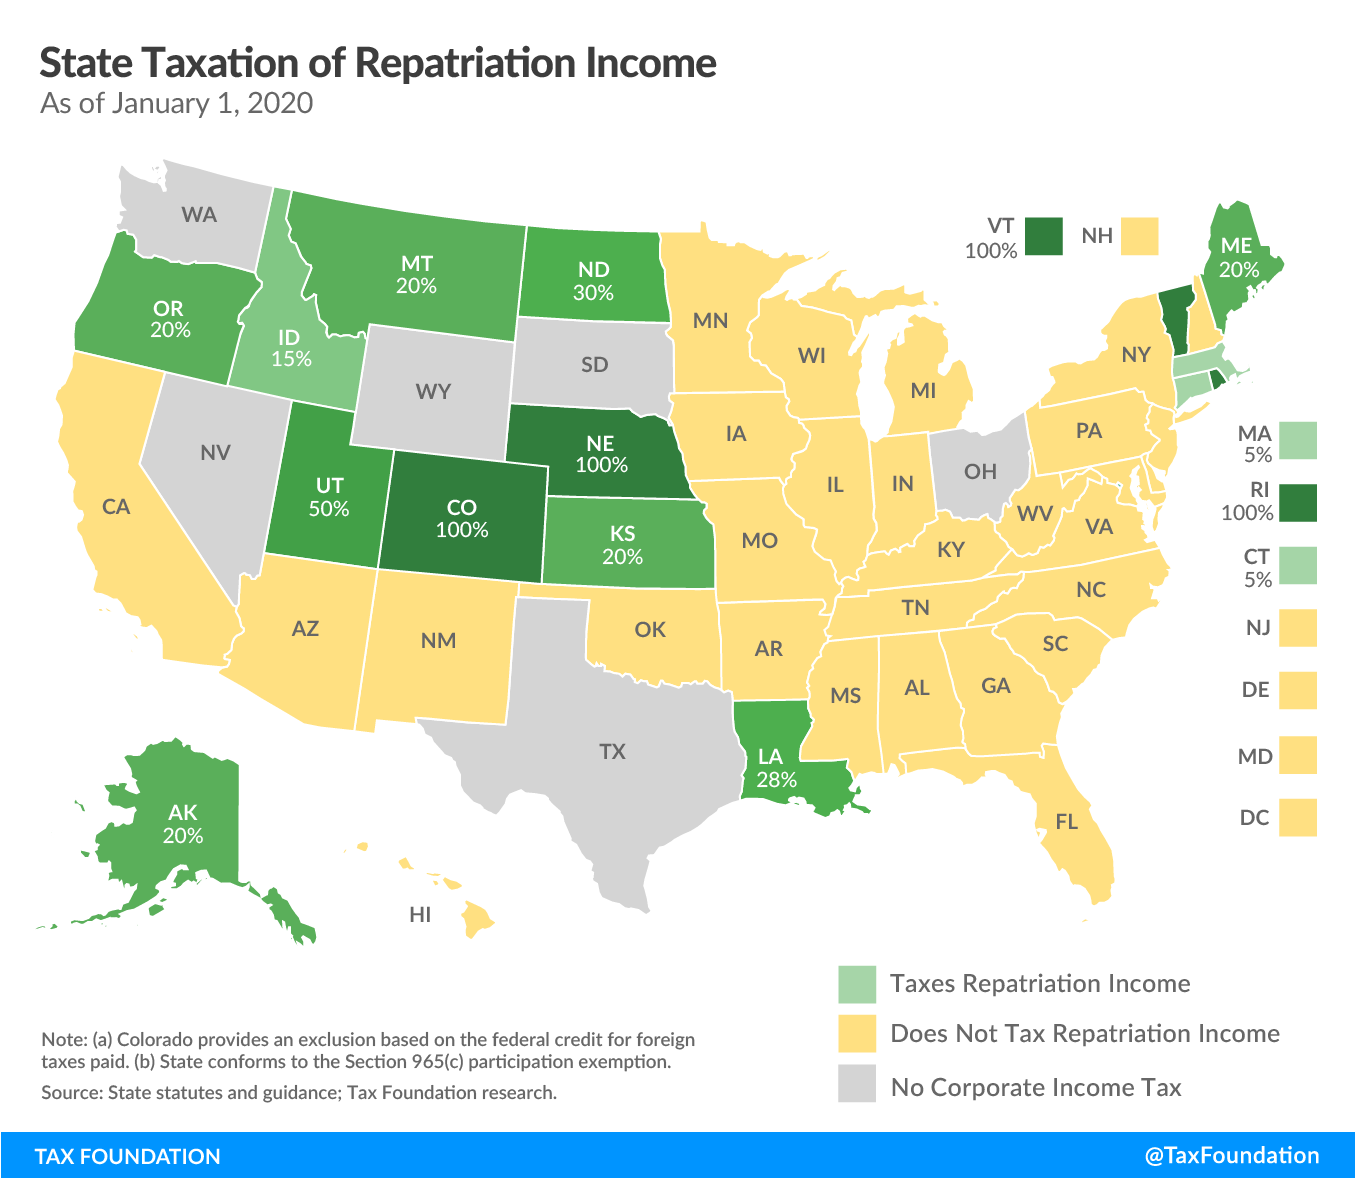 State taxation of repatriation income